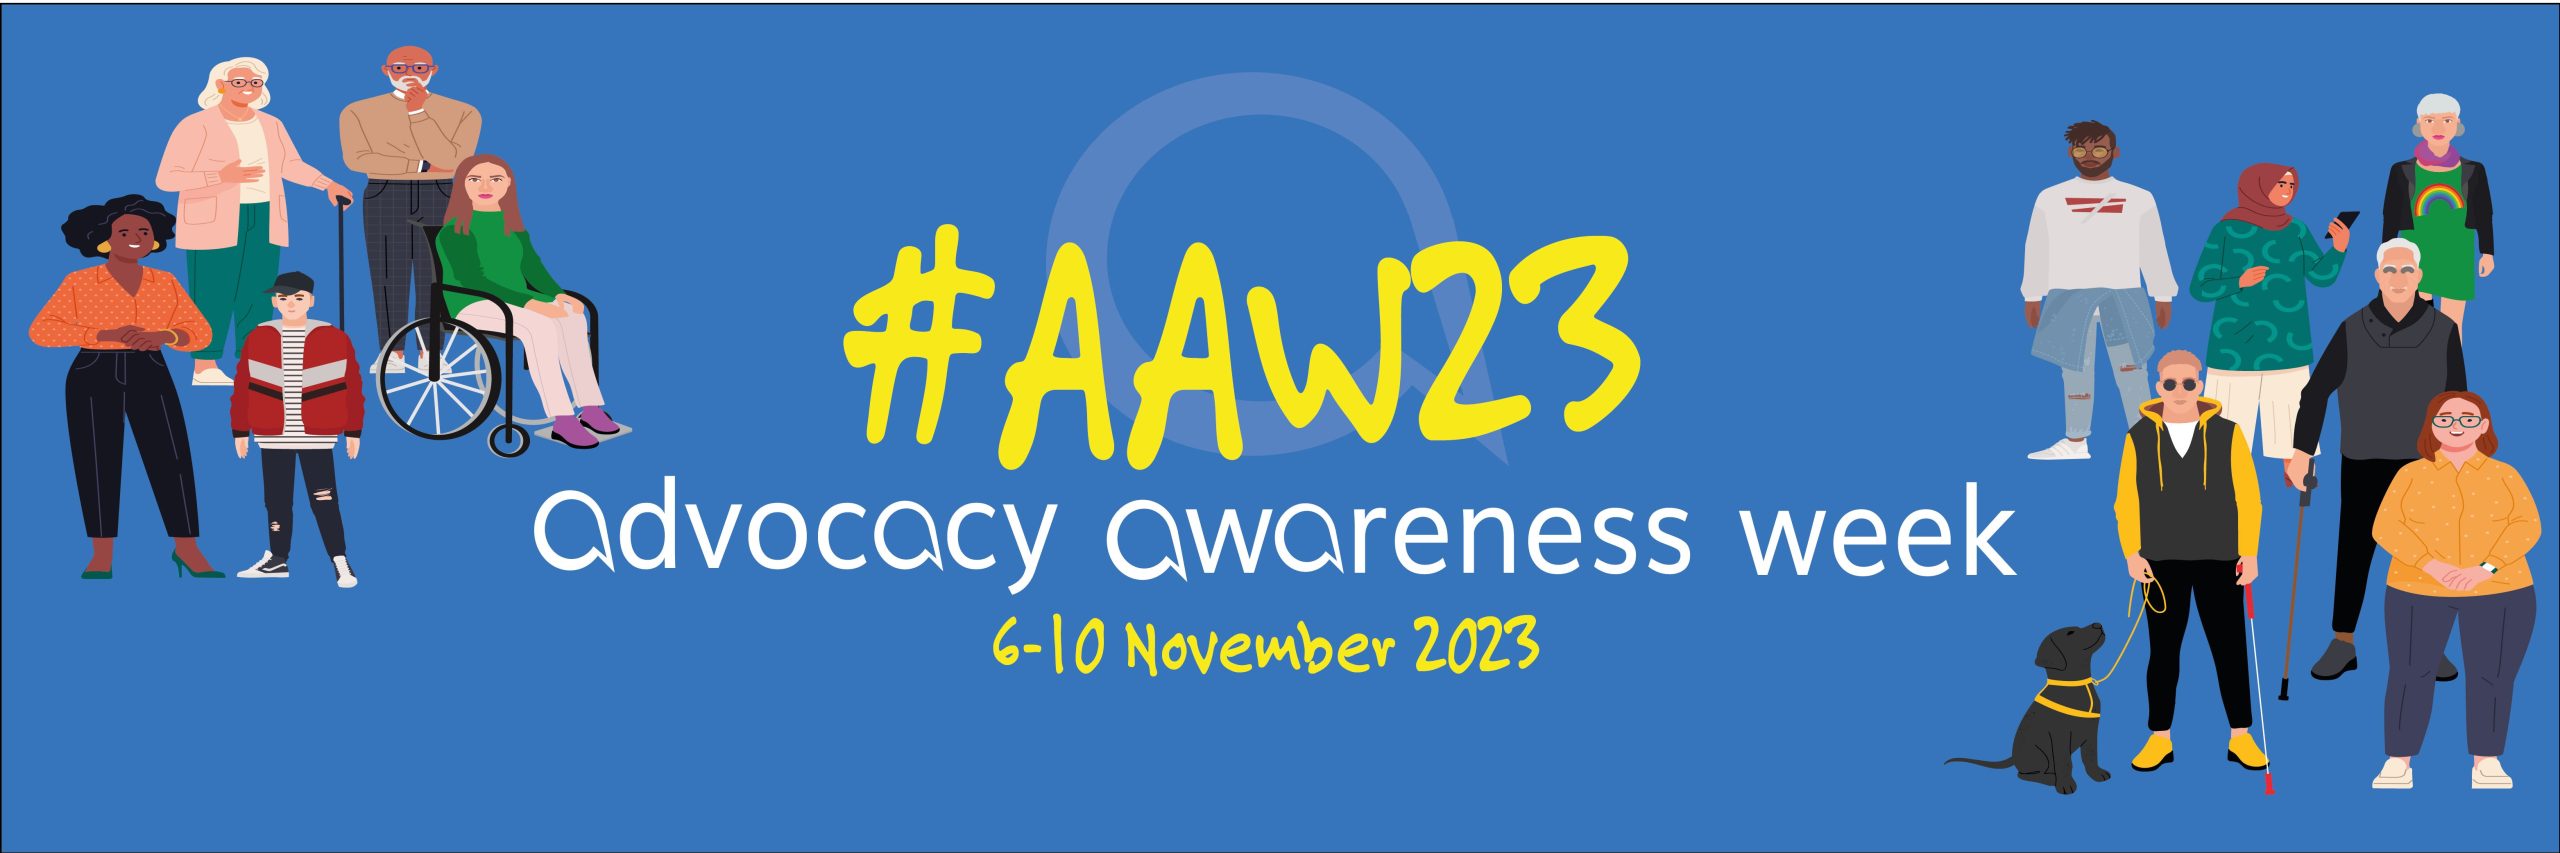 Advocacy Awareness Week 2023 - Banner